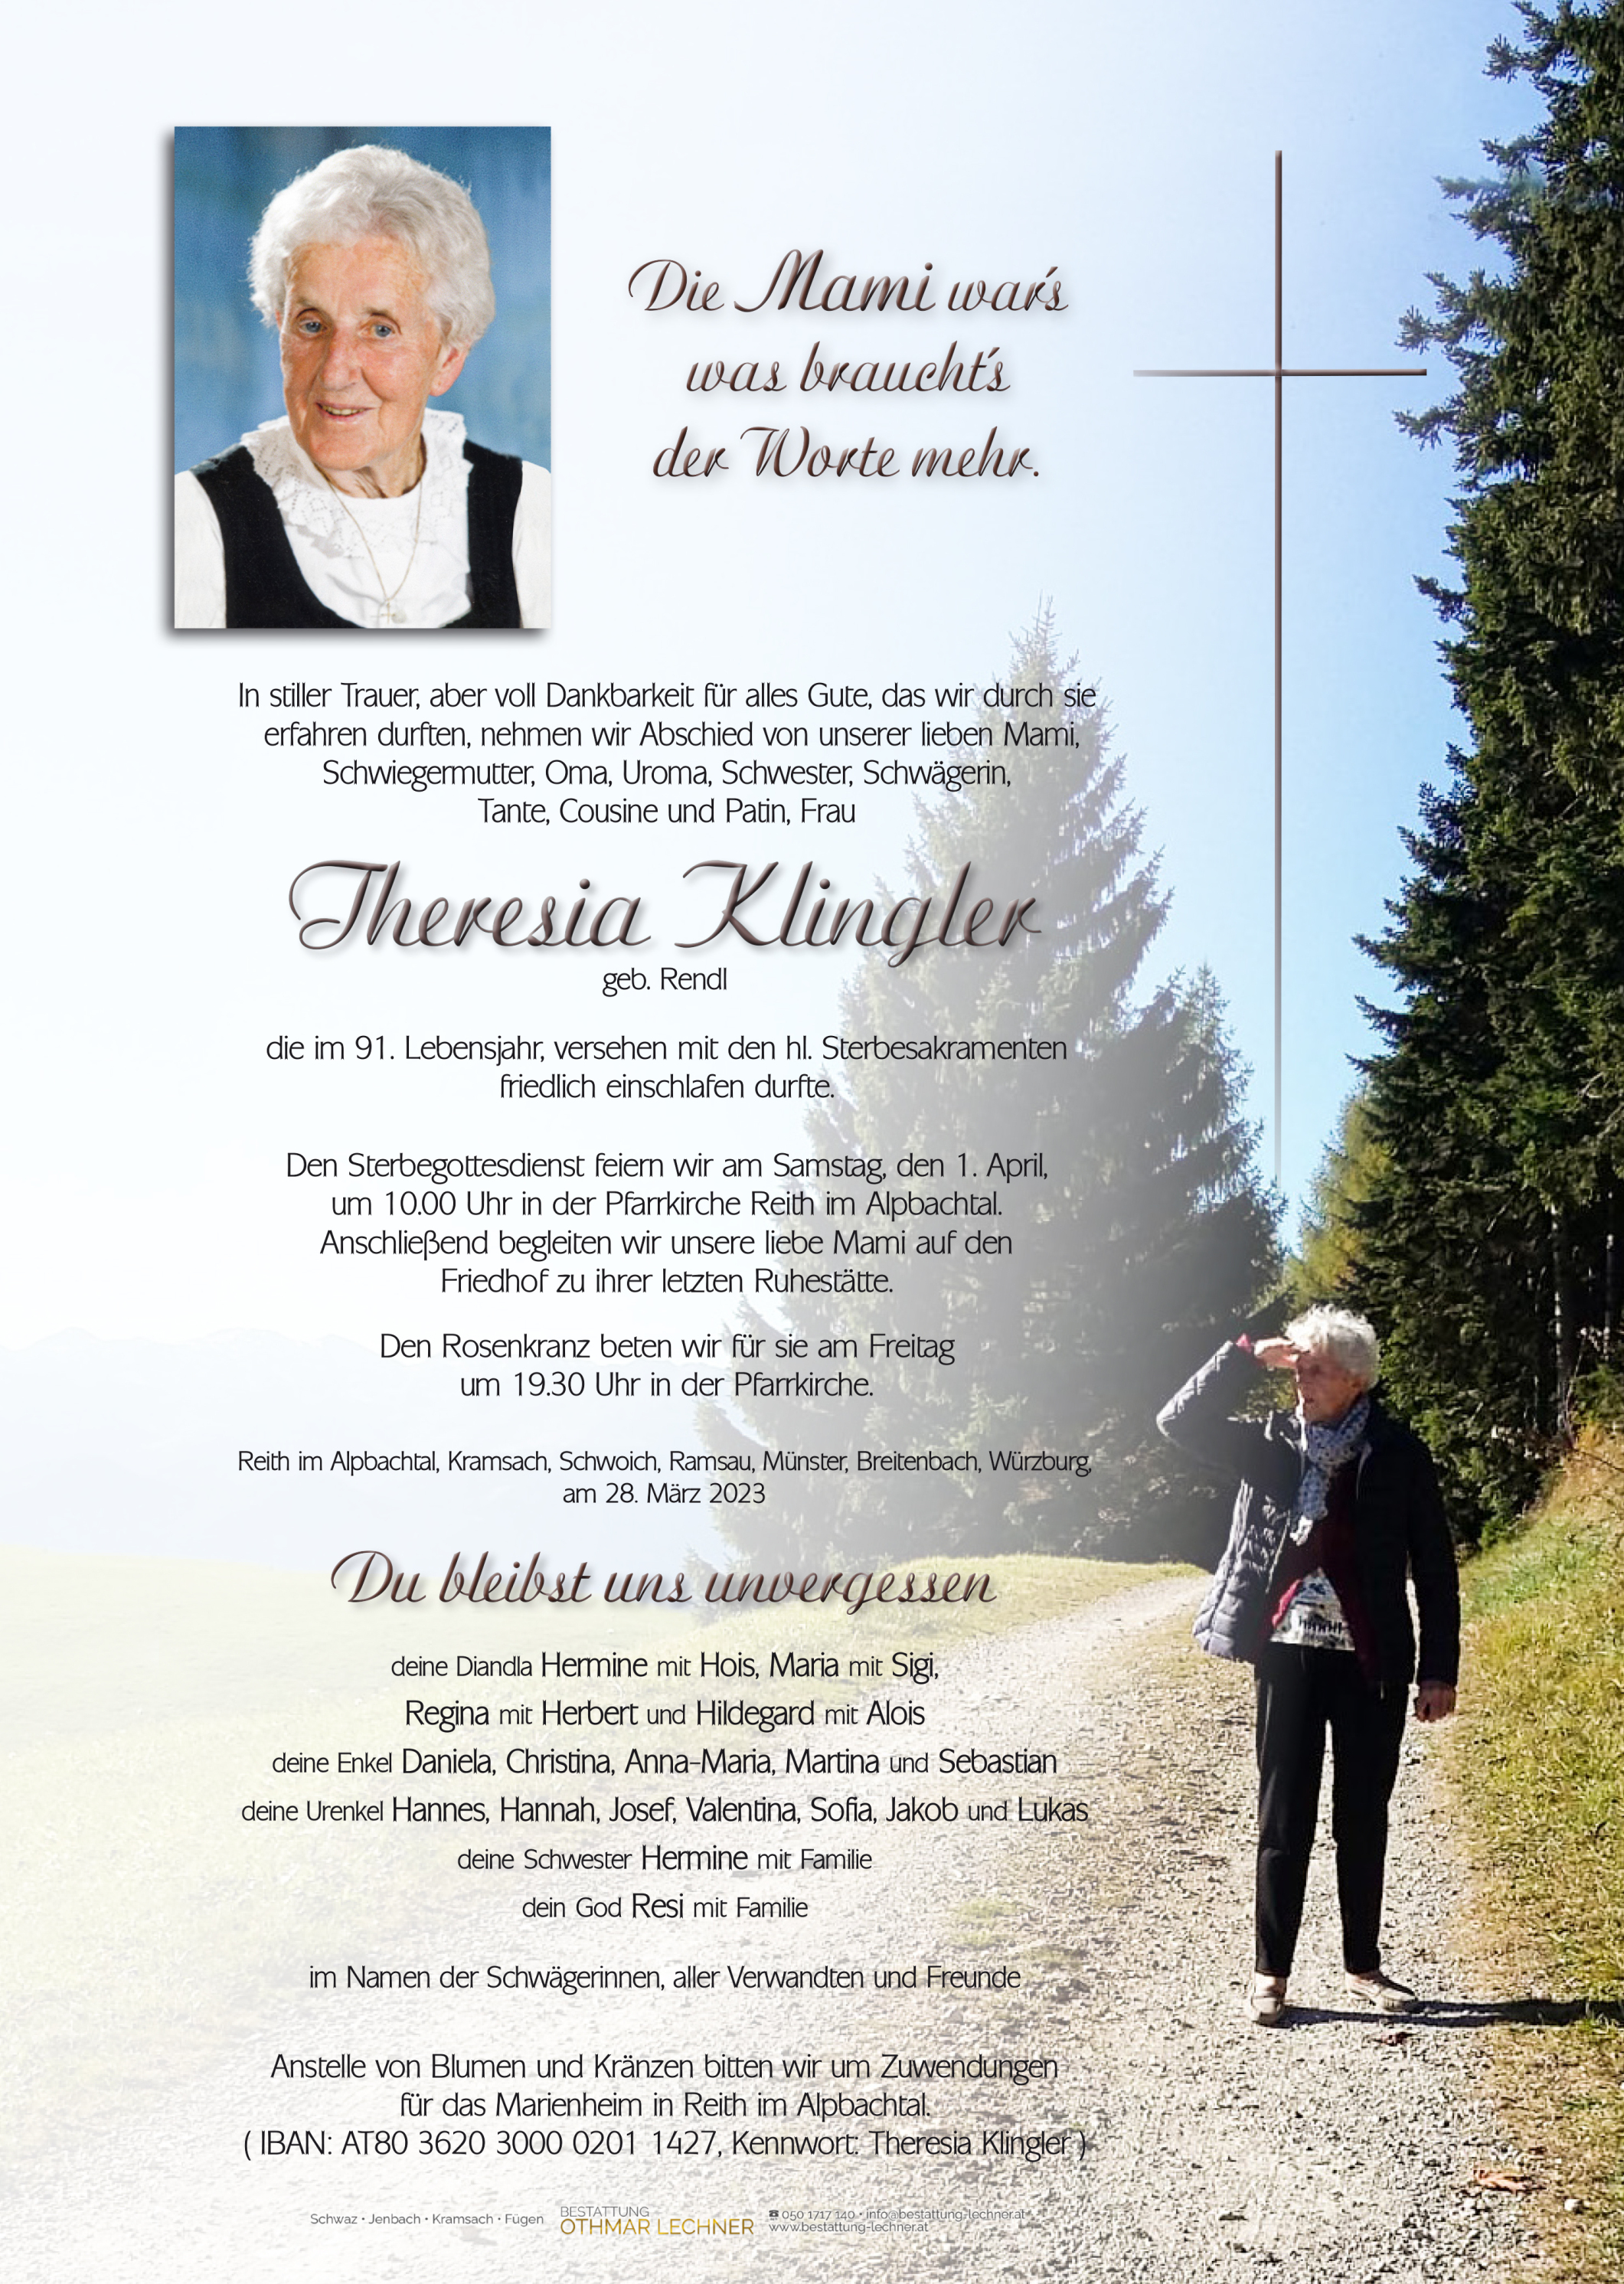 Theresia Klingler